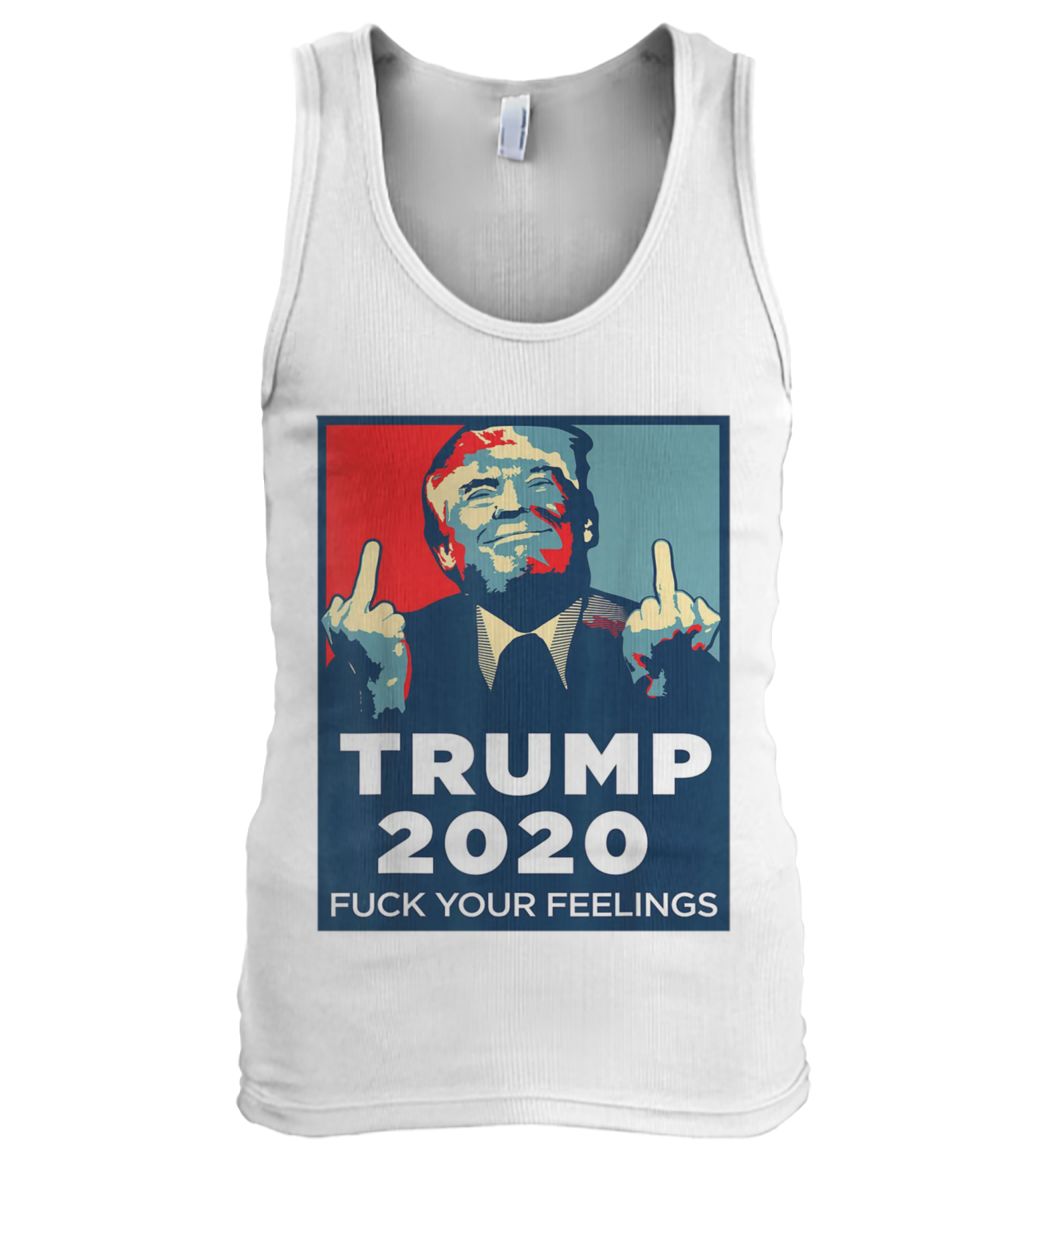 Trump 2020 fuck your feelings men's tank top